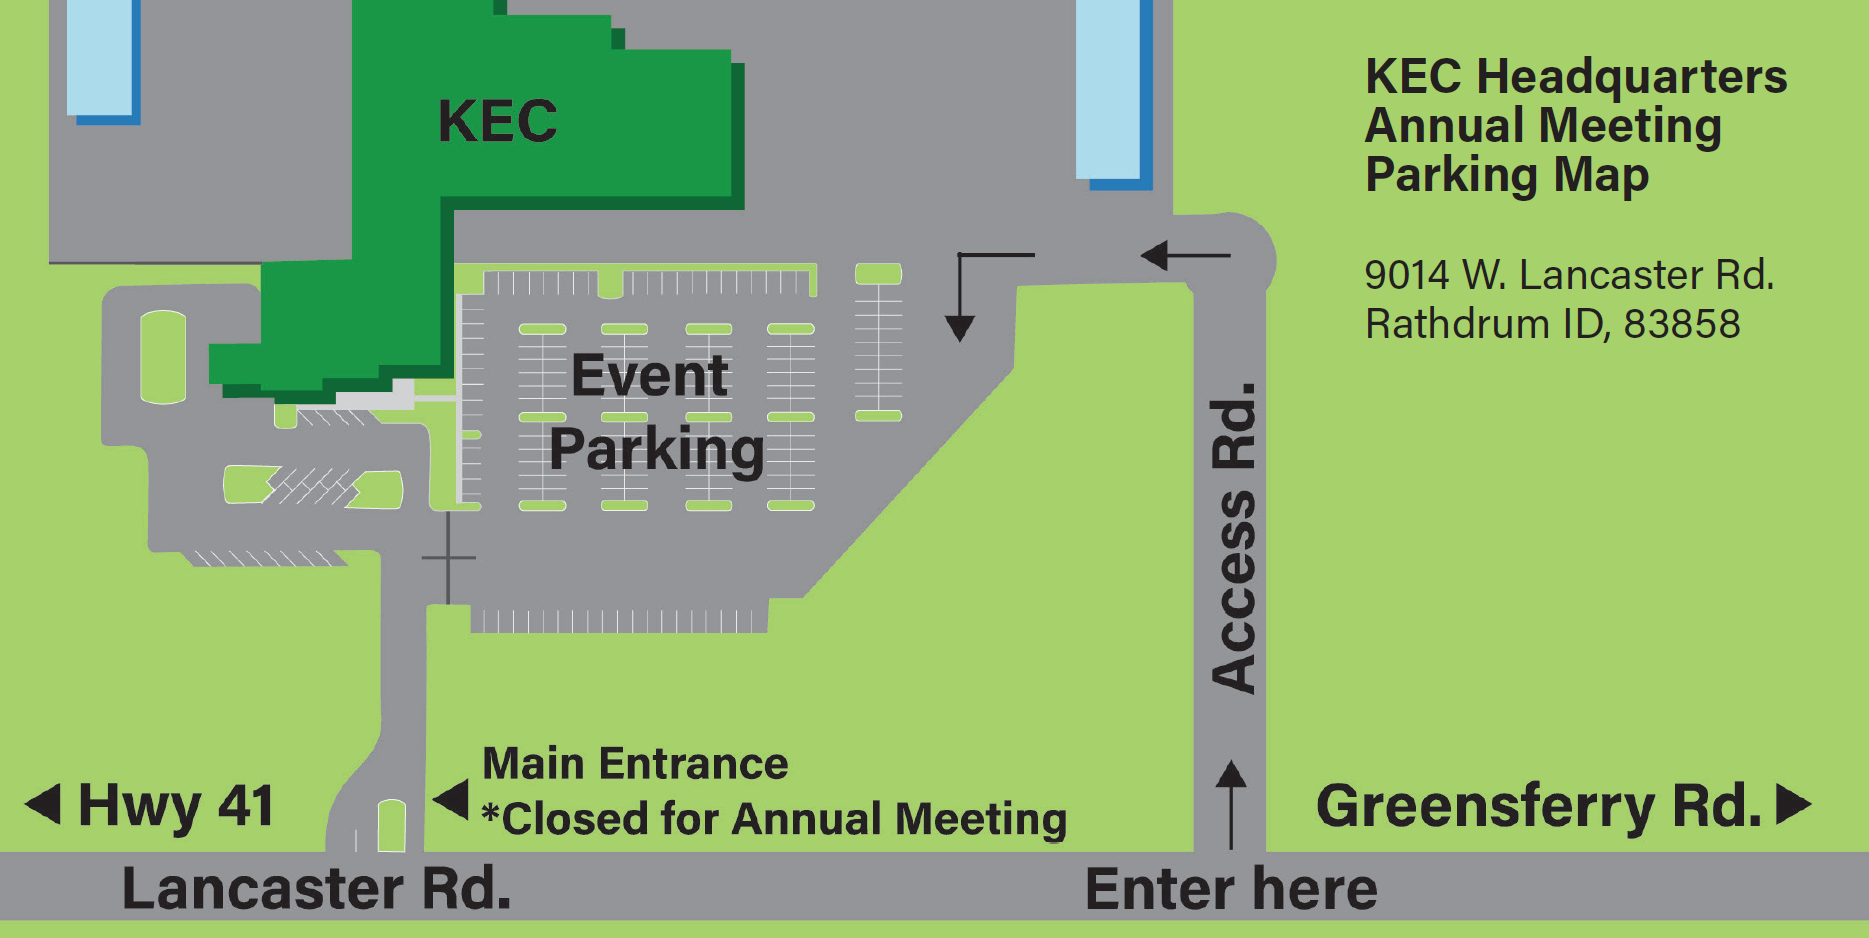 KEC Headquarters Annual Meeting Parking Map